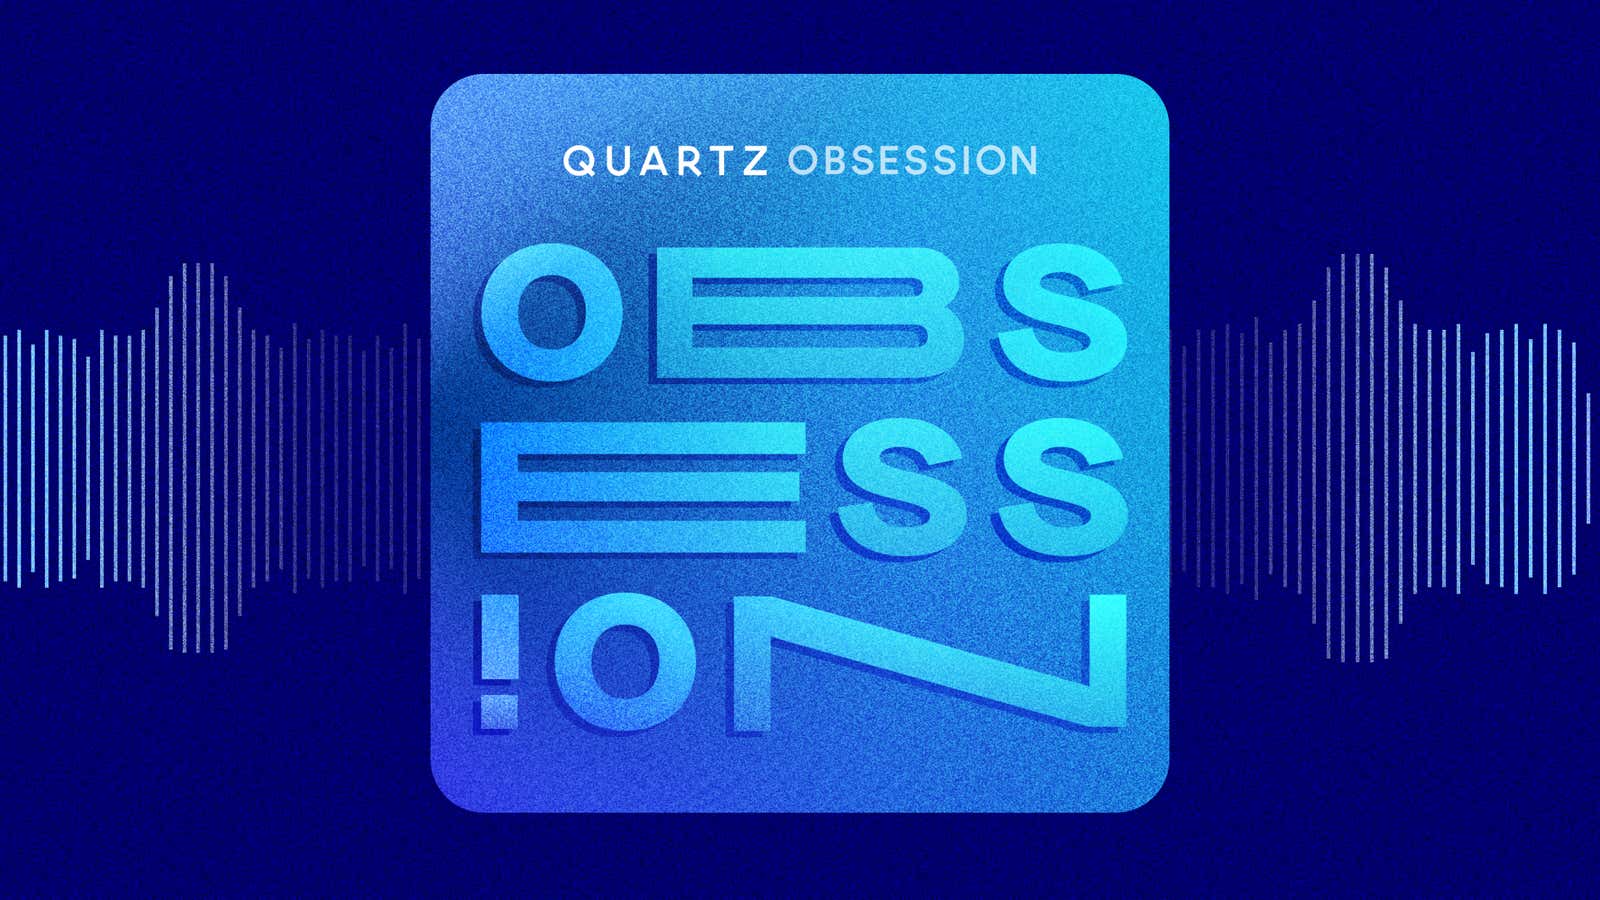 Season 2 of the Quartz Obsession podcast, coming Feb. 1